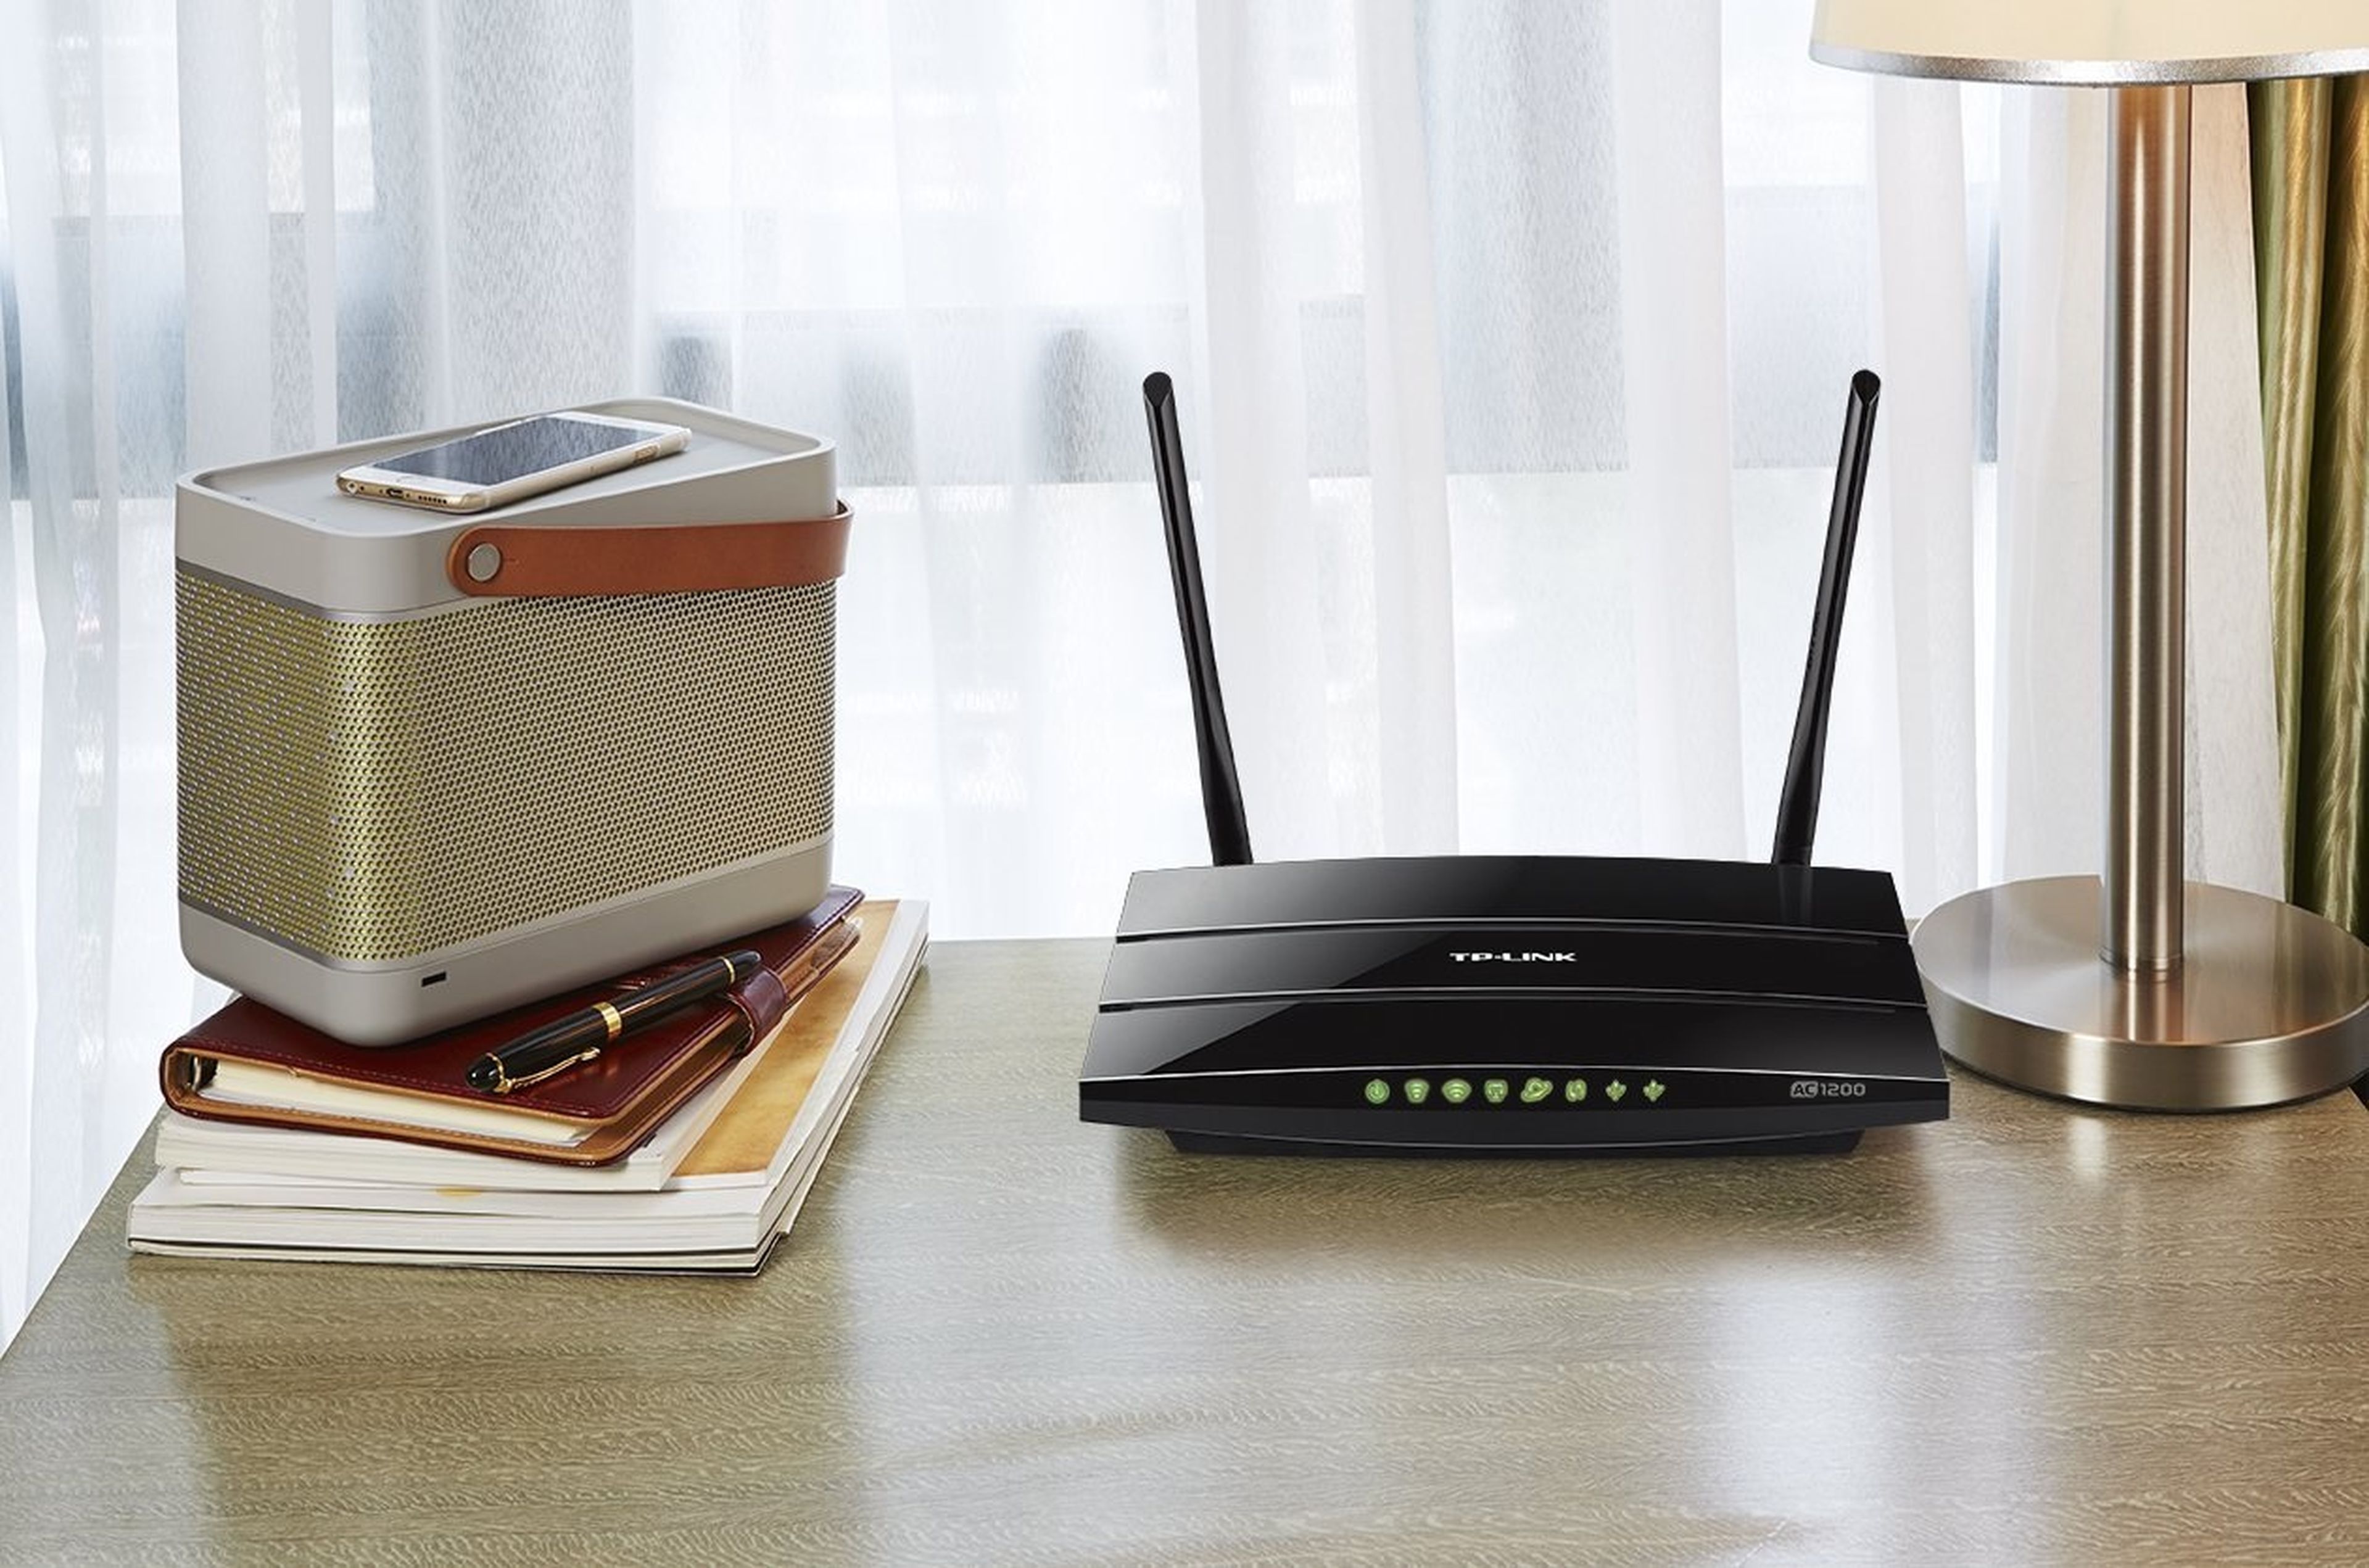 Mejores routers WiFi Gigabit baratos